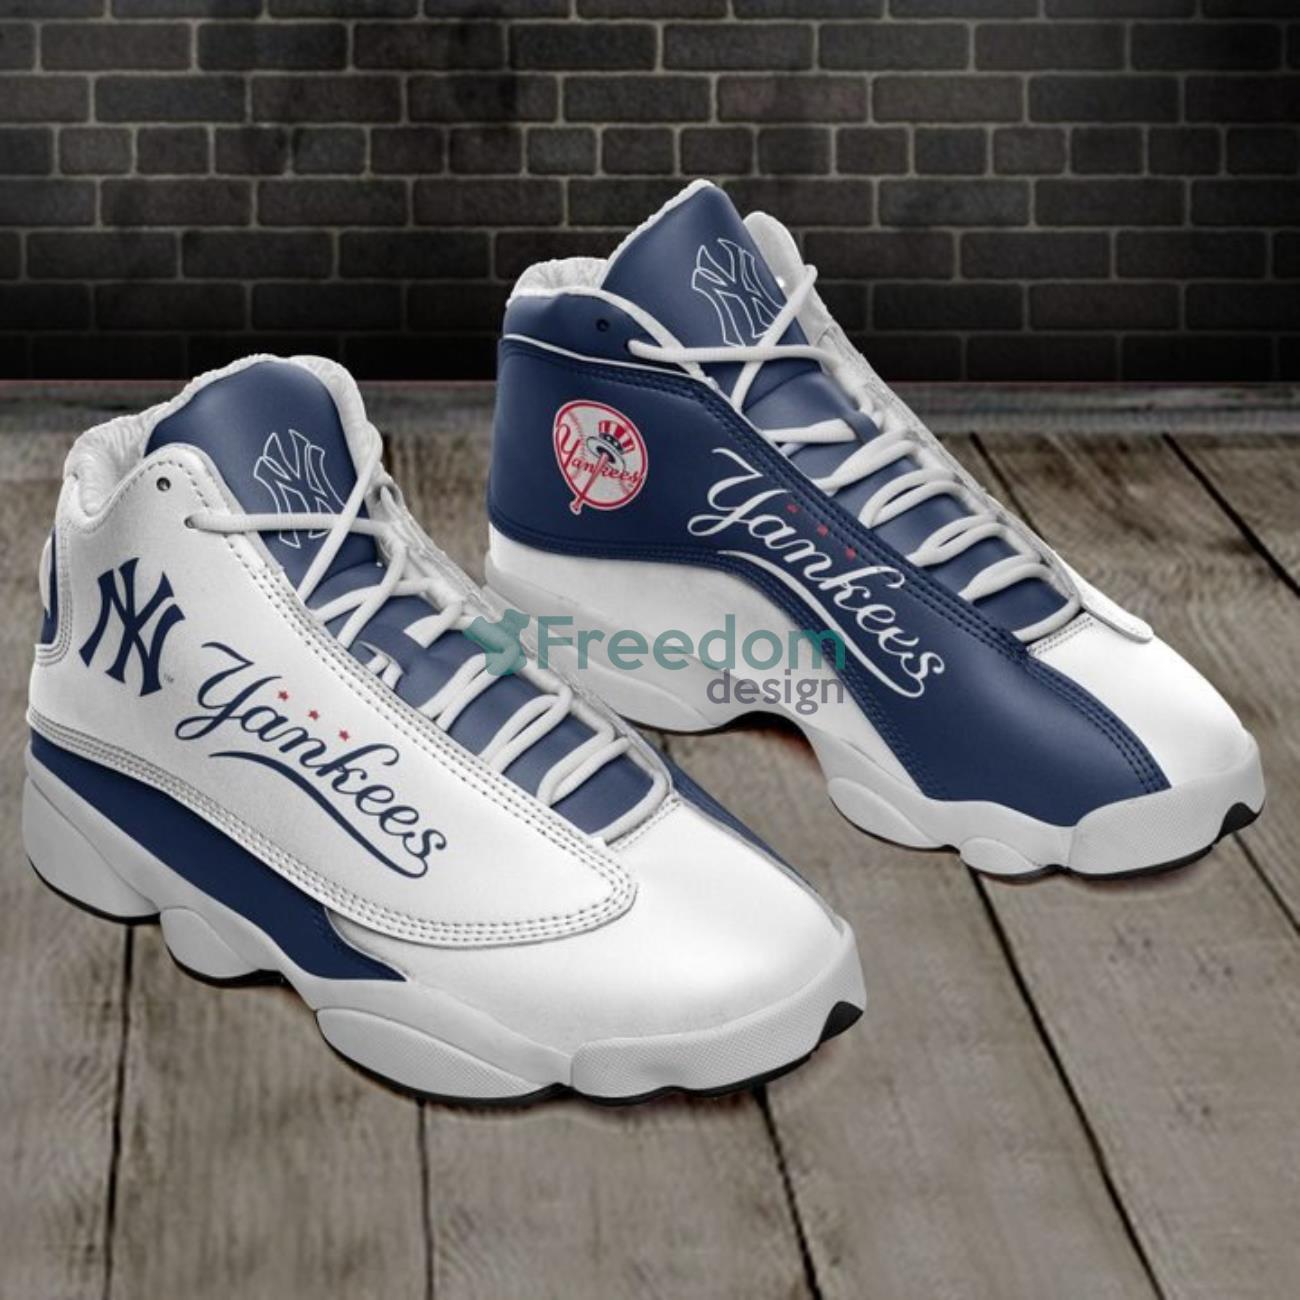 New York Yankees Team Air Jordan 13 Sneaker Shoes For Fans